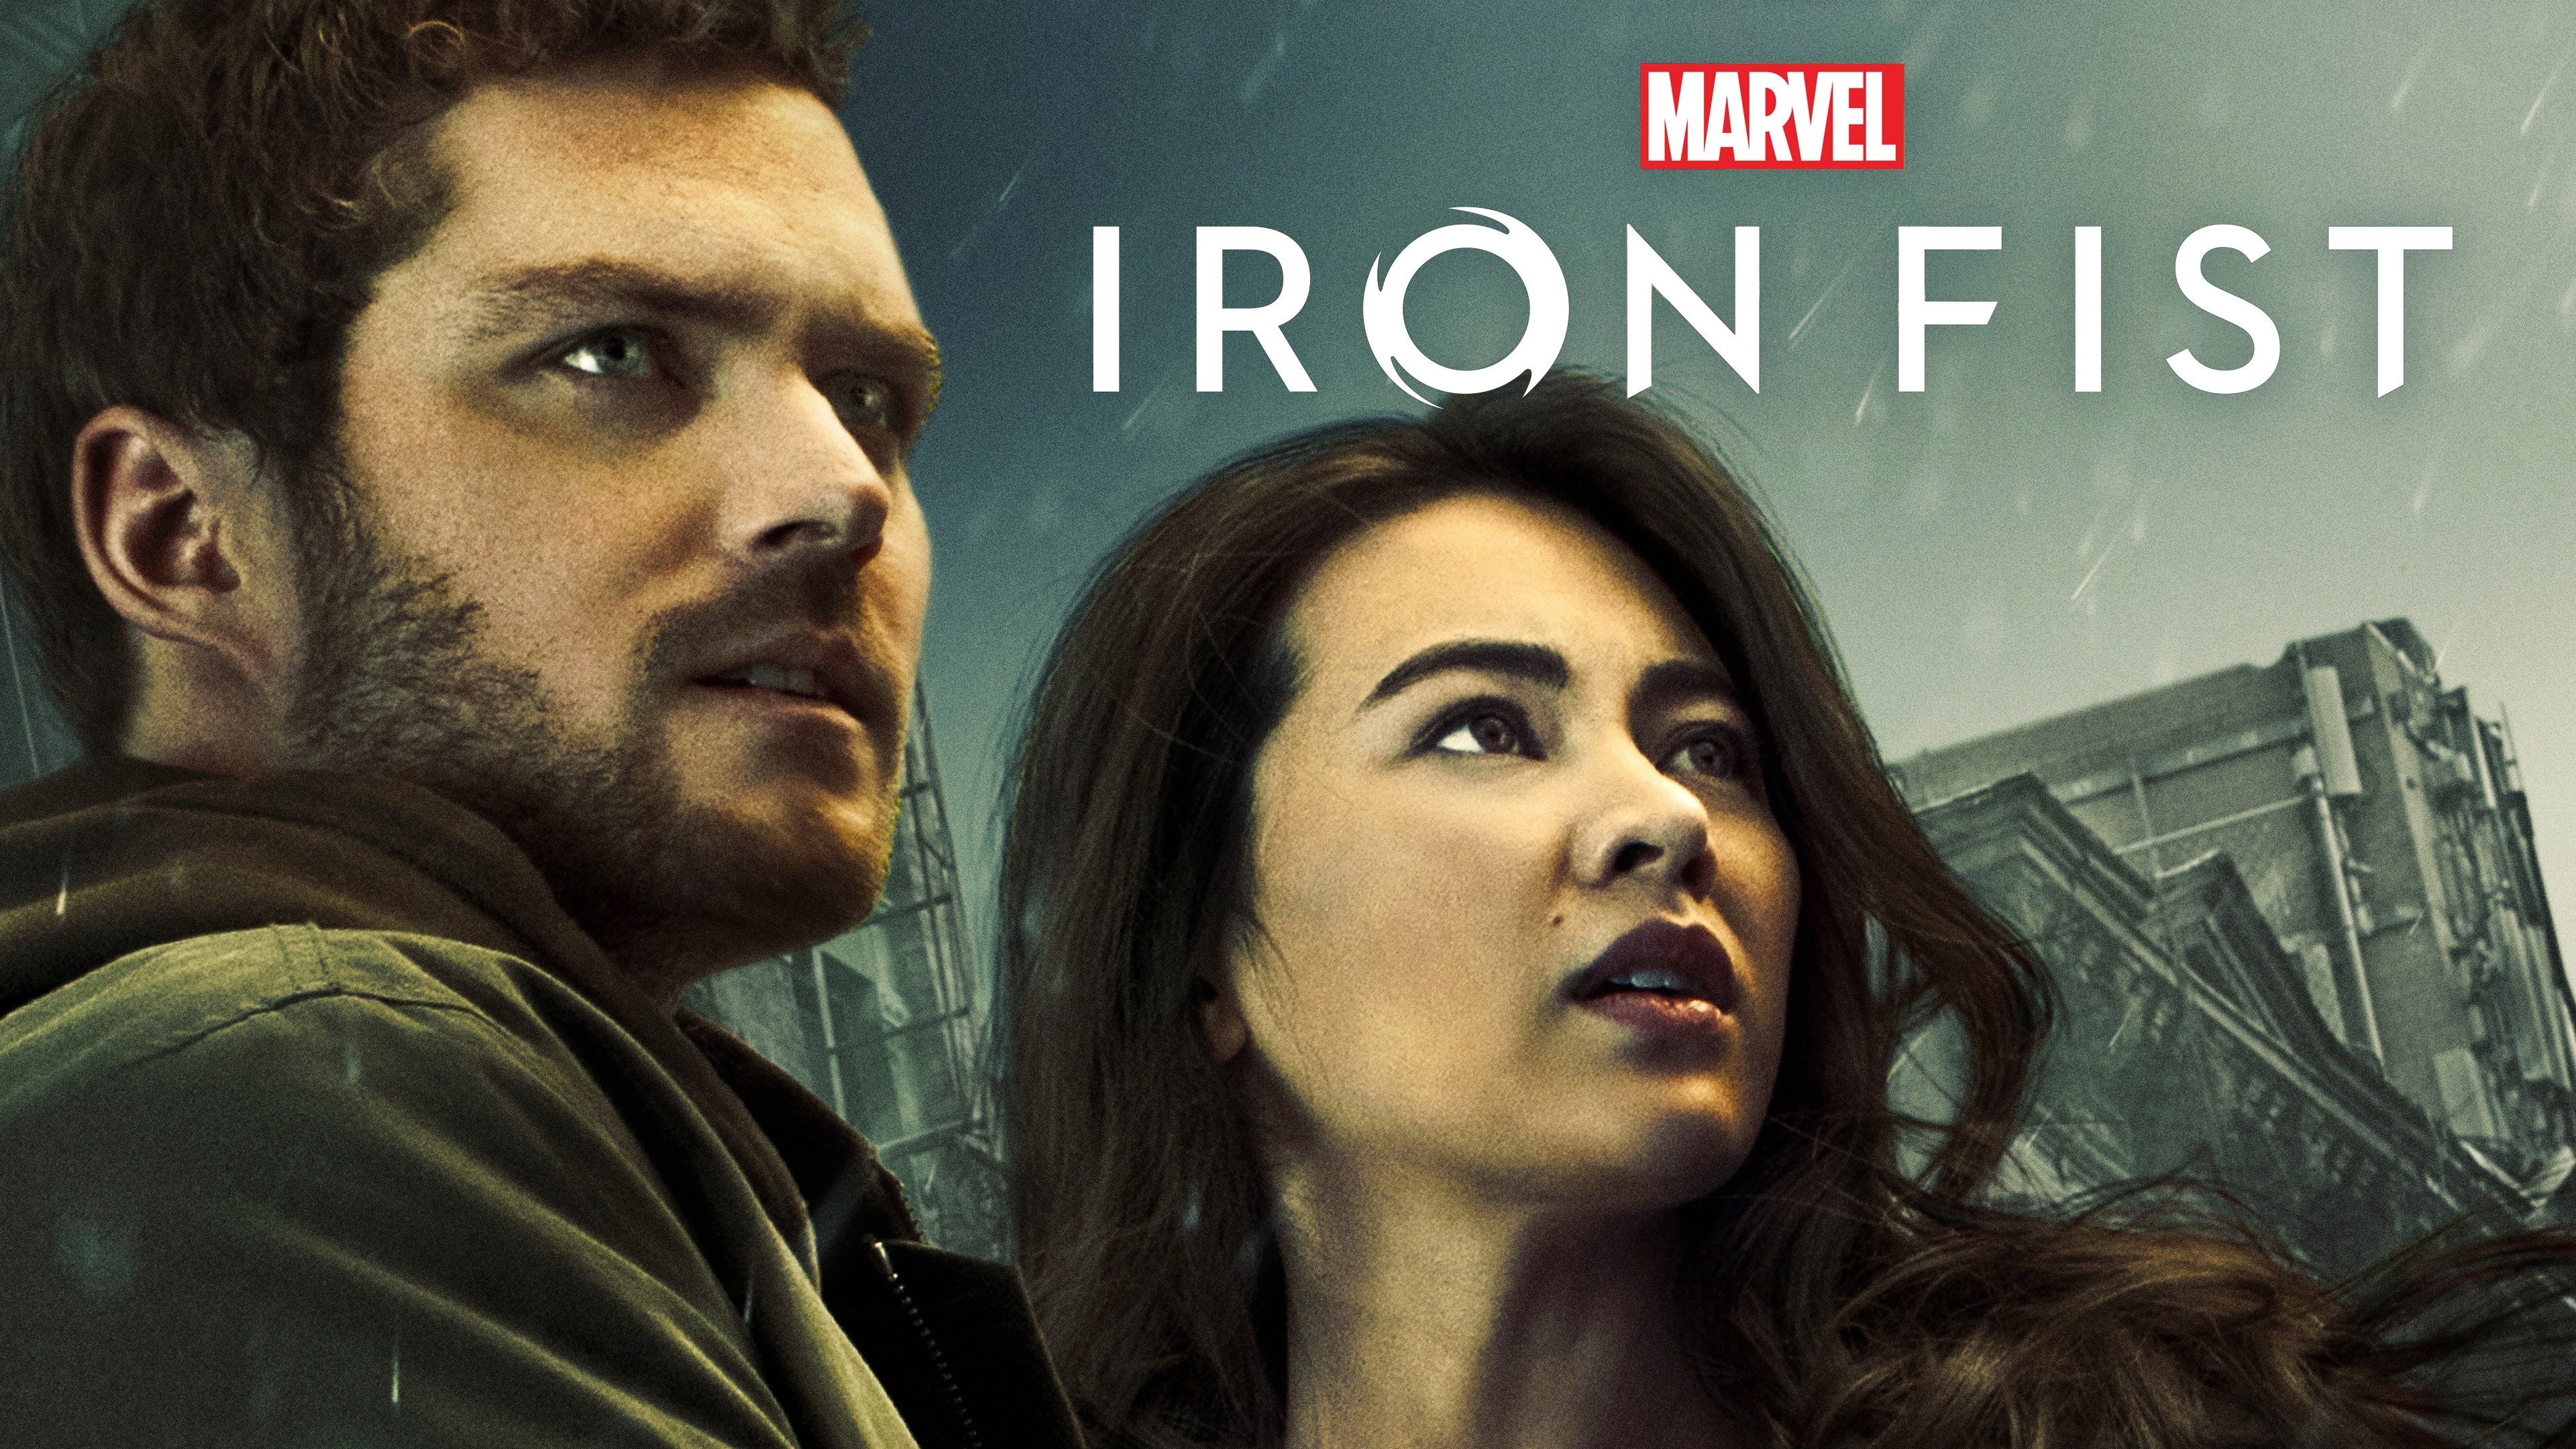 Iron Fist Season 2: Every Update - Trailer, Cast, Release Date